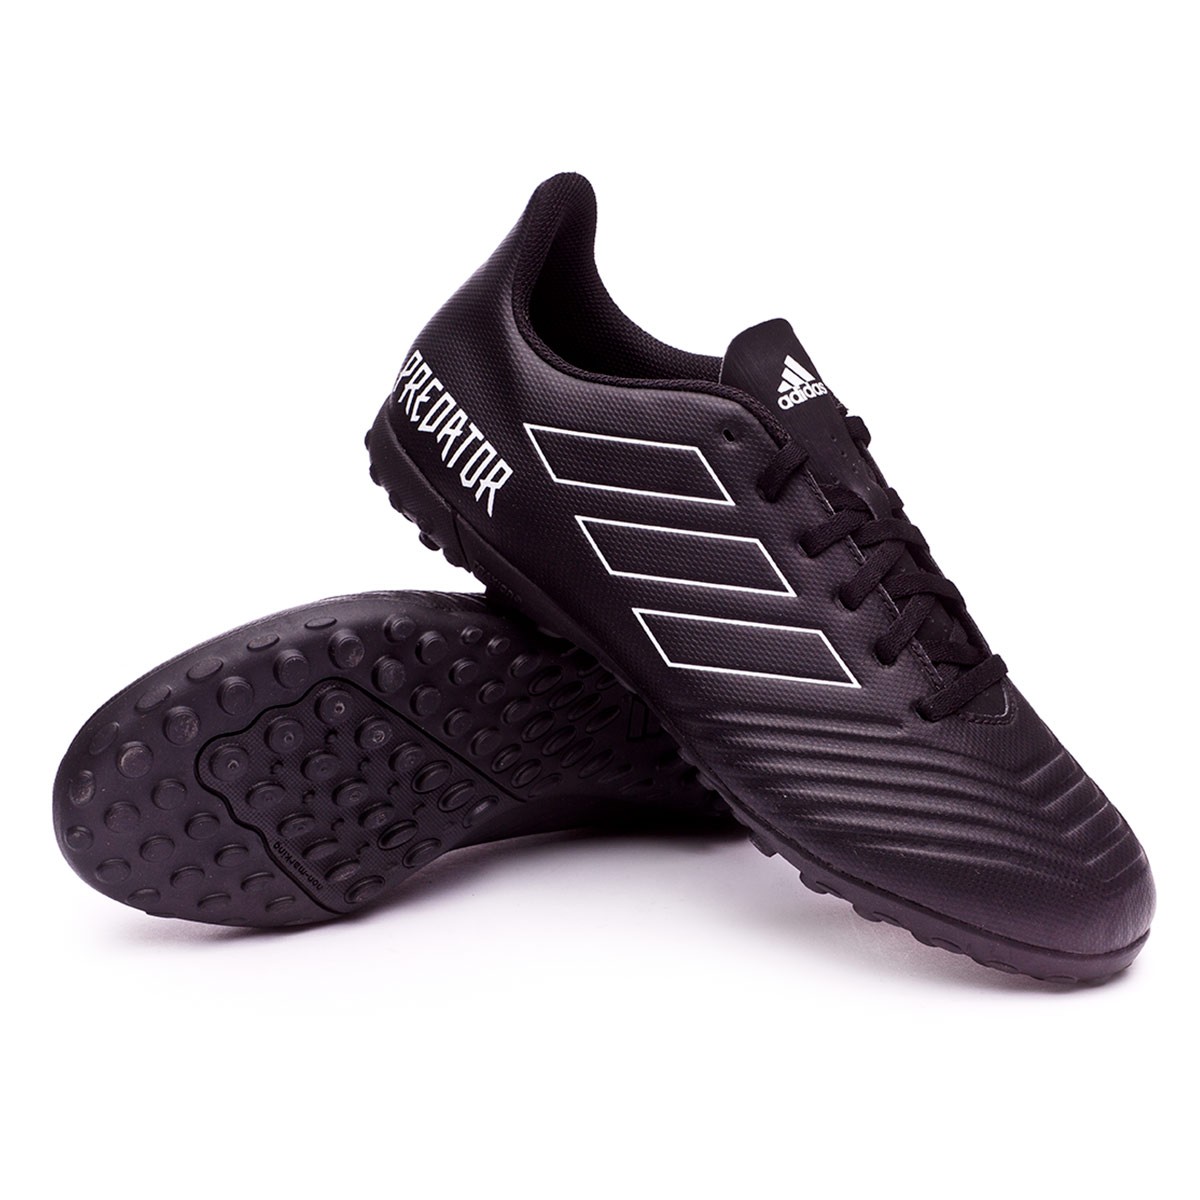 Football Boot adidas Predator Tango 18 